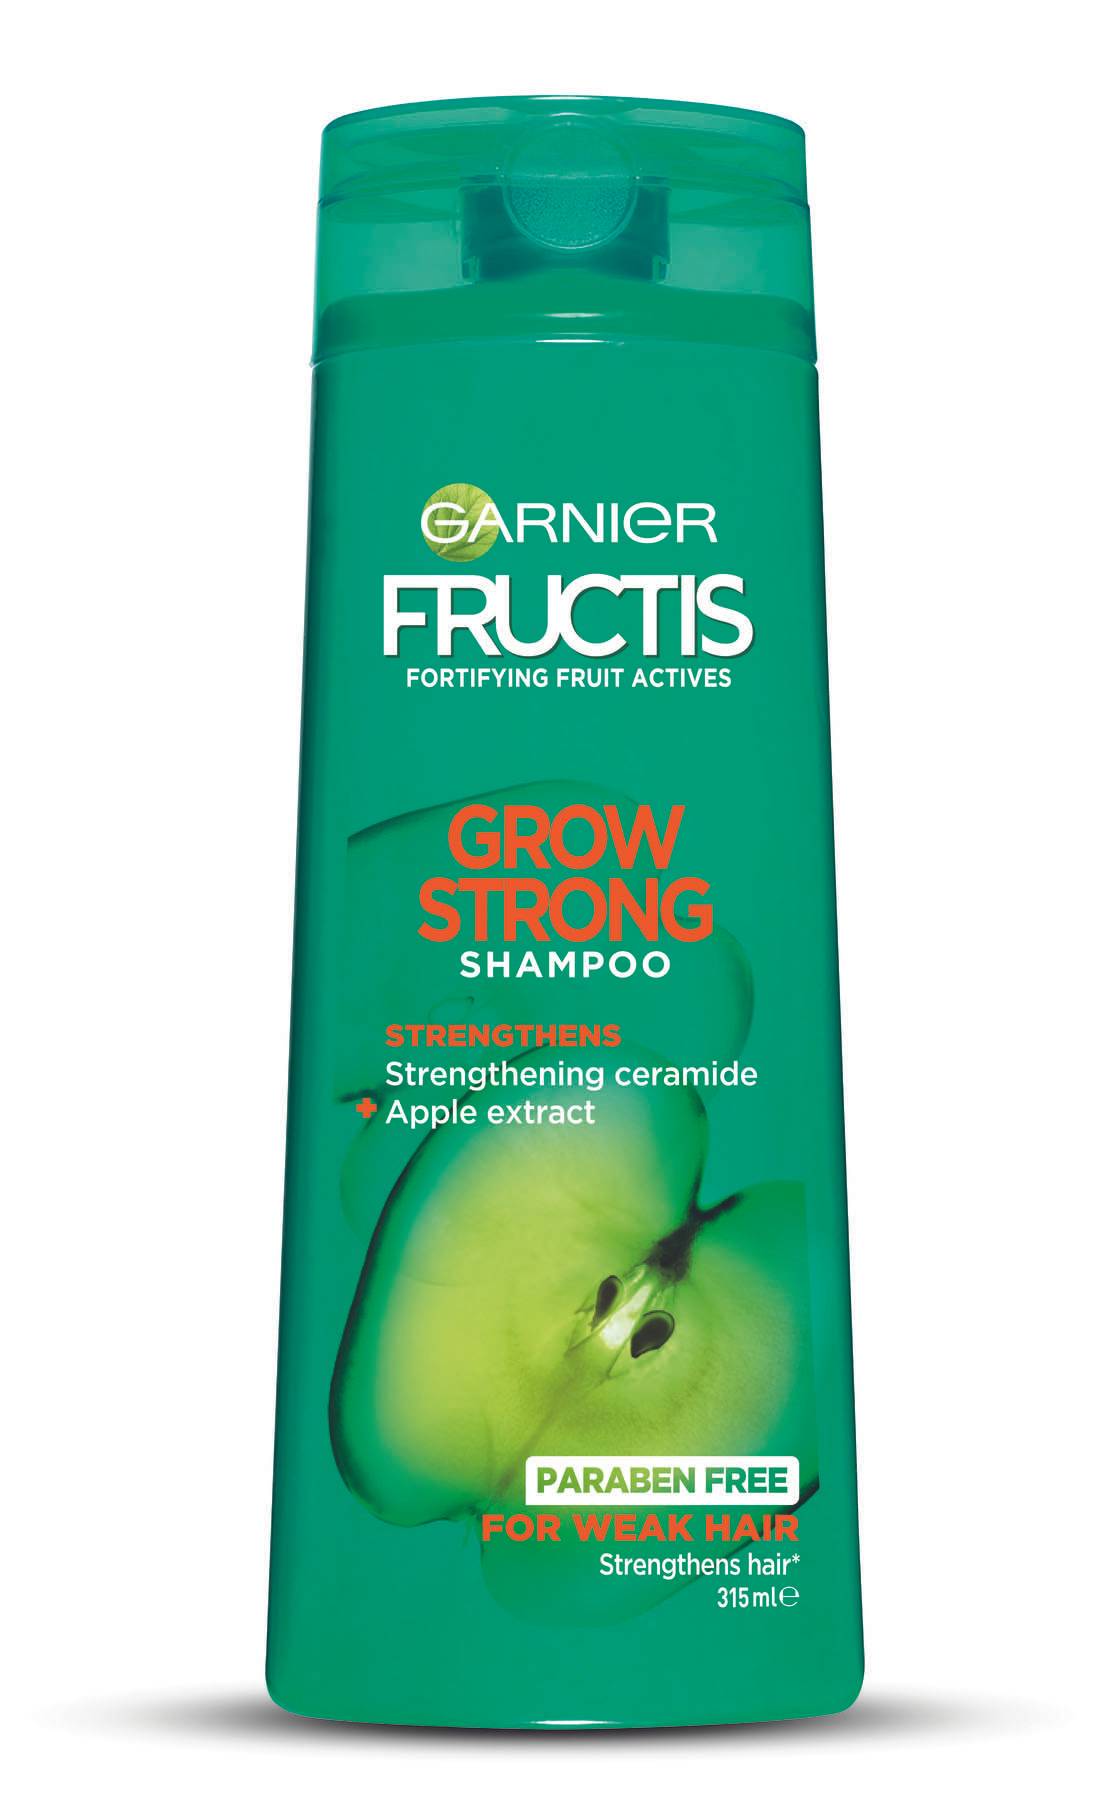 Garnier Fructis Shampoo Grow Strong 315ml